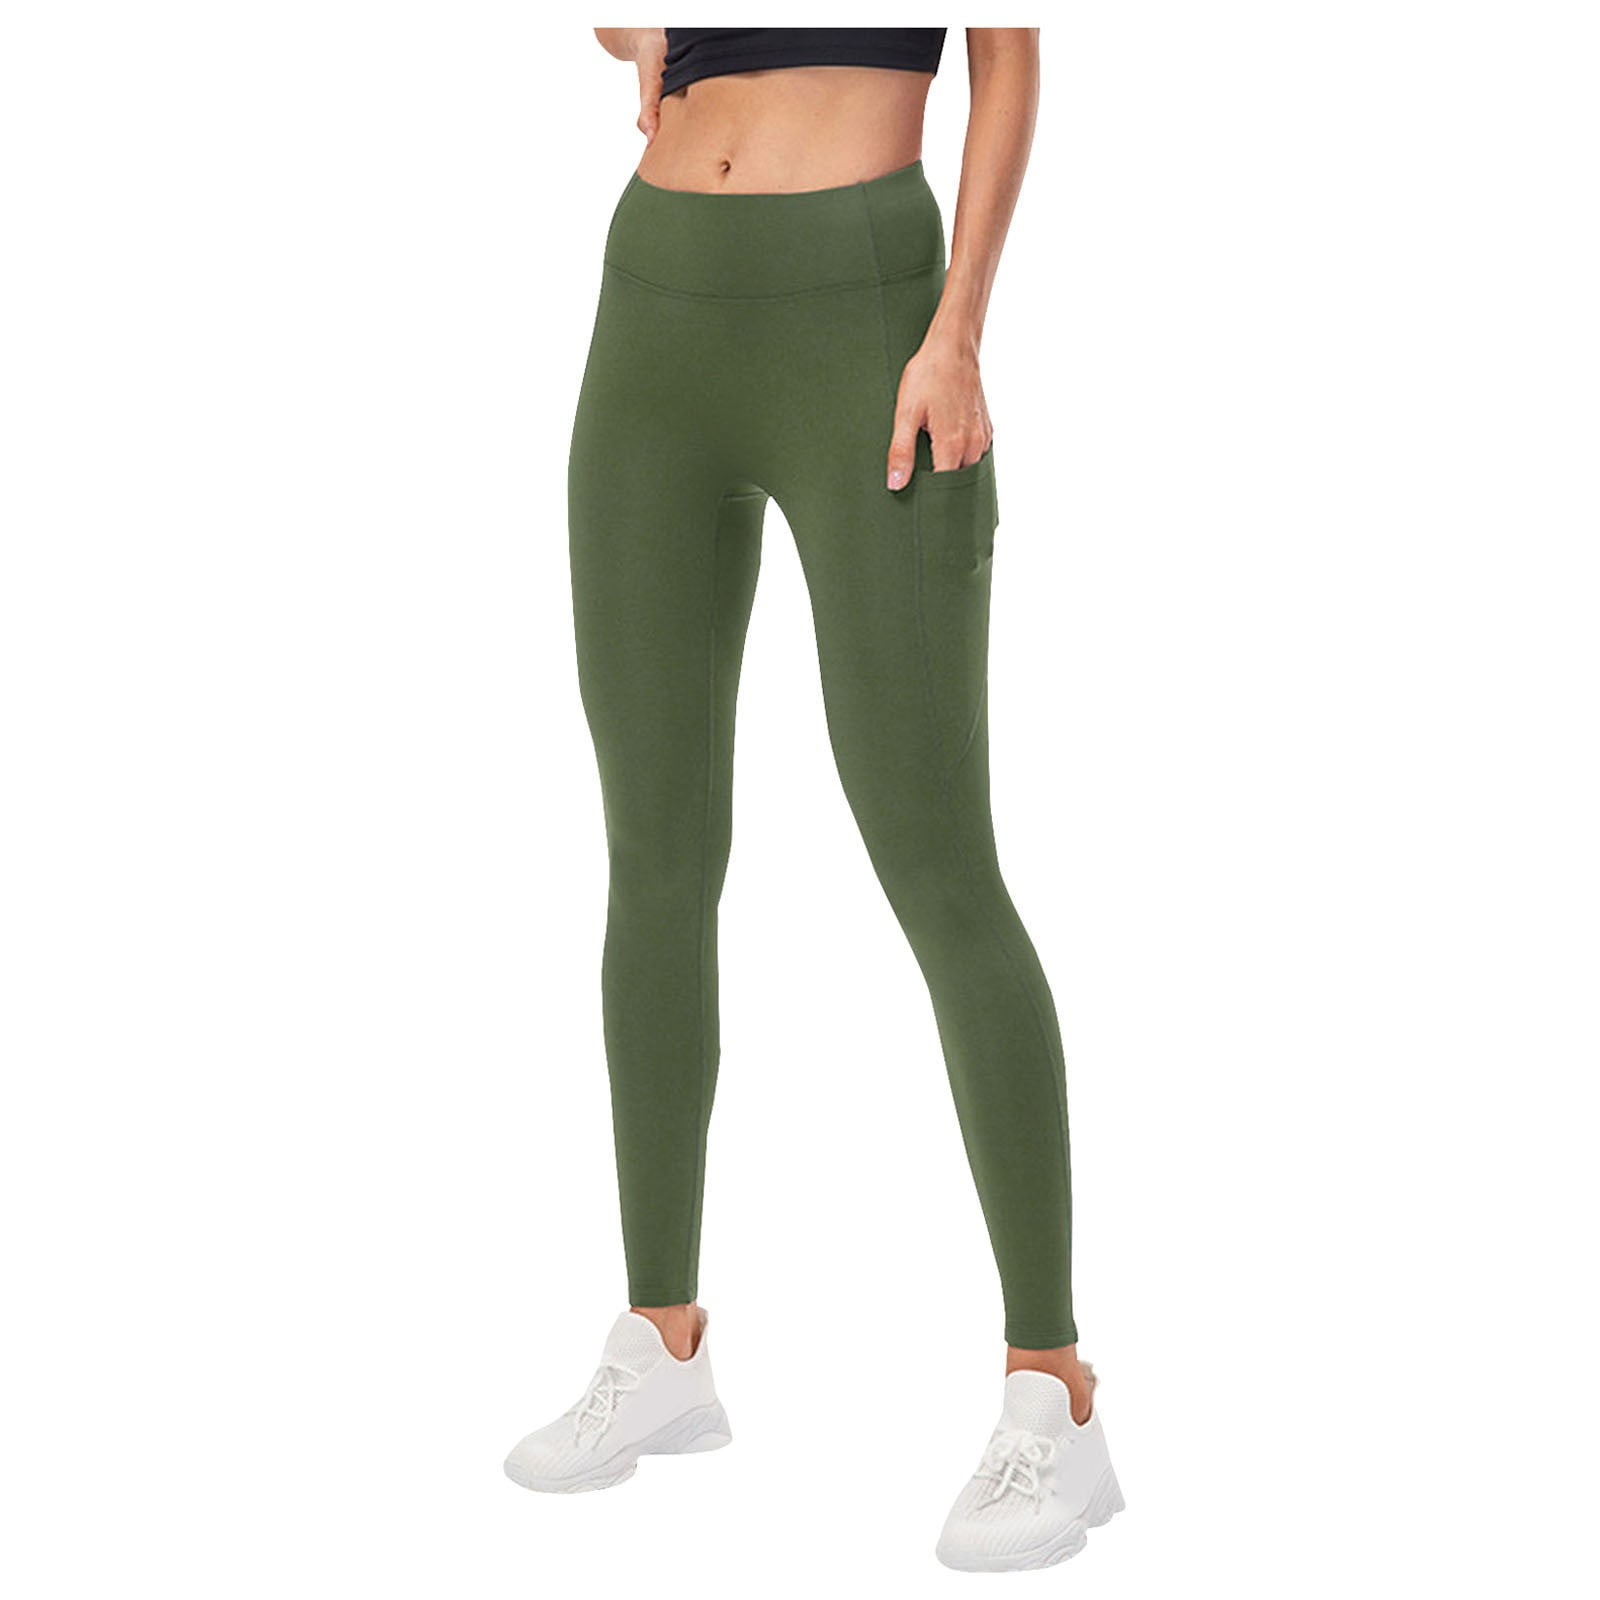 KaLI_store Yoga Pants Women Women's Scrunch Lift Leggings Seamless Tights  Squat Proof Tummy Control Yoga Pants Army Green,S 